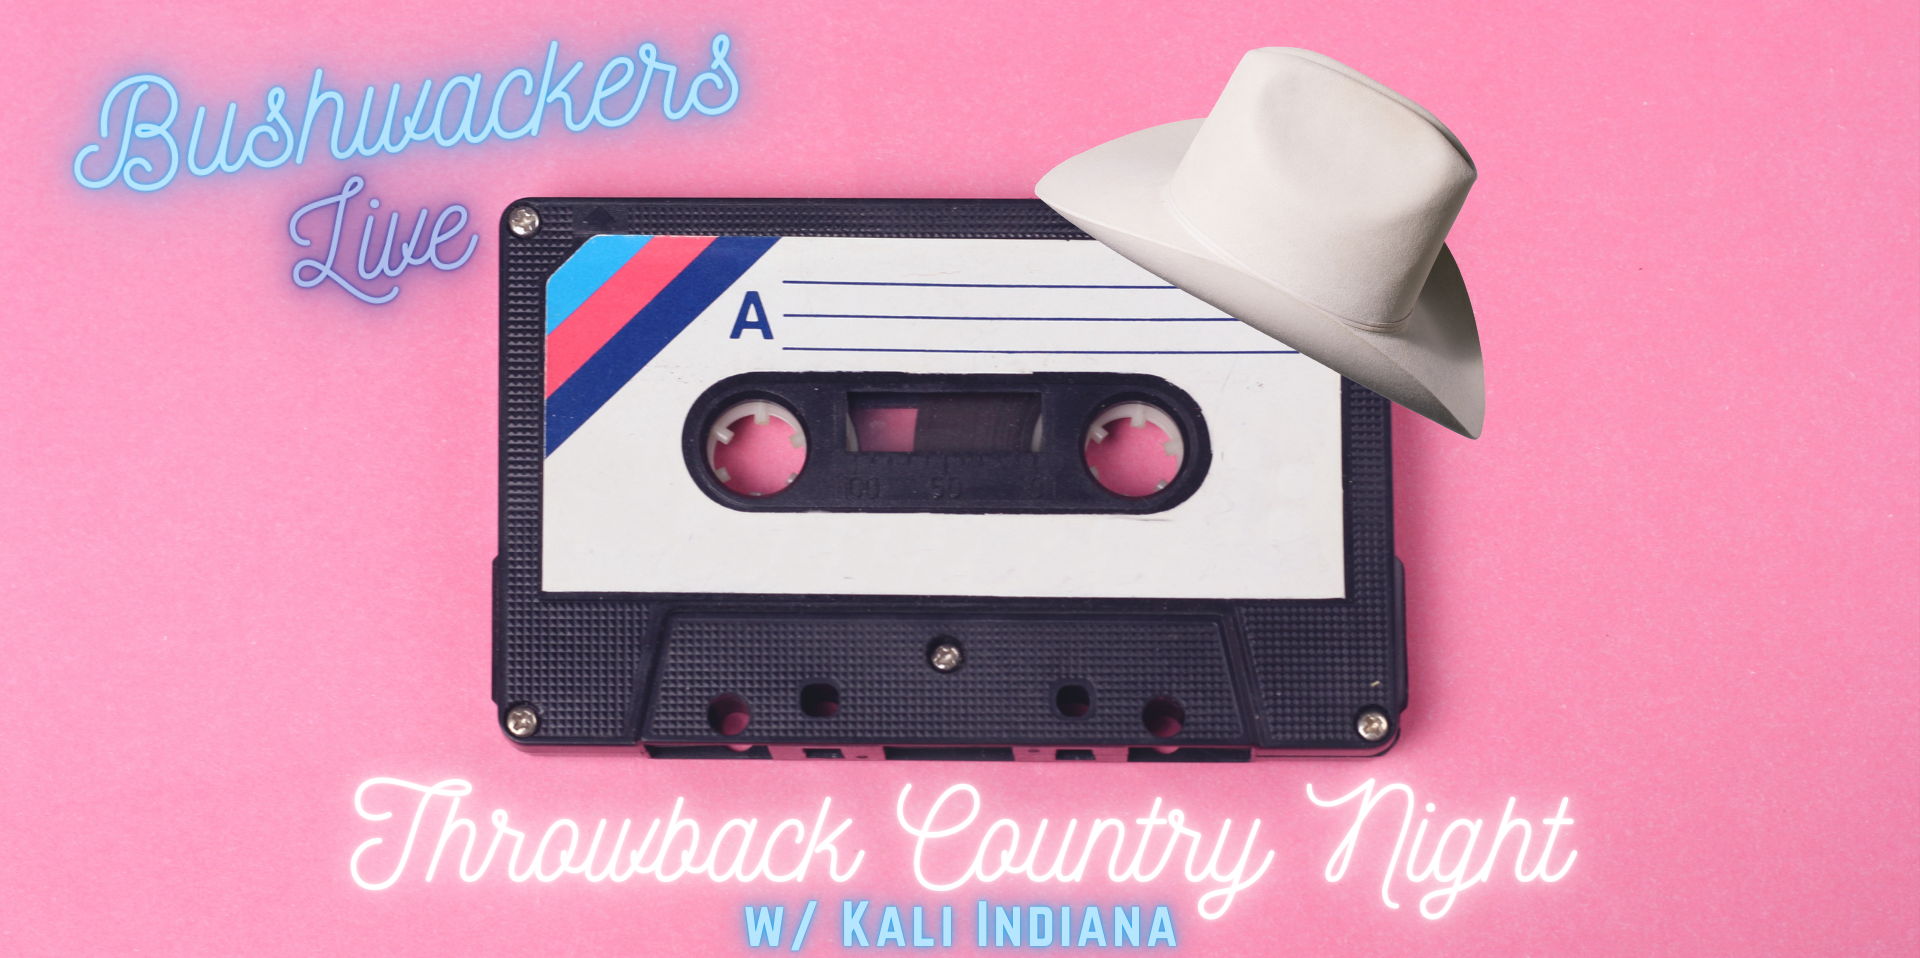 Bushwackers Live: Throwback Country Night w/ Kali Indiana promotional image